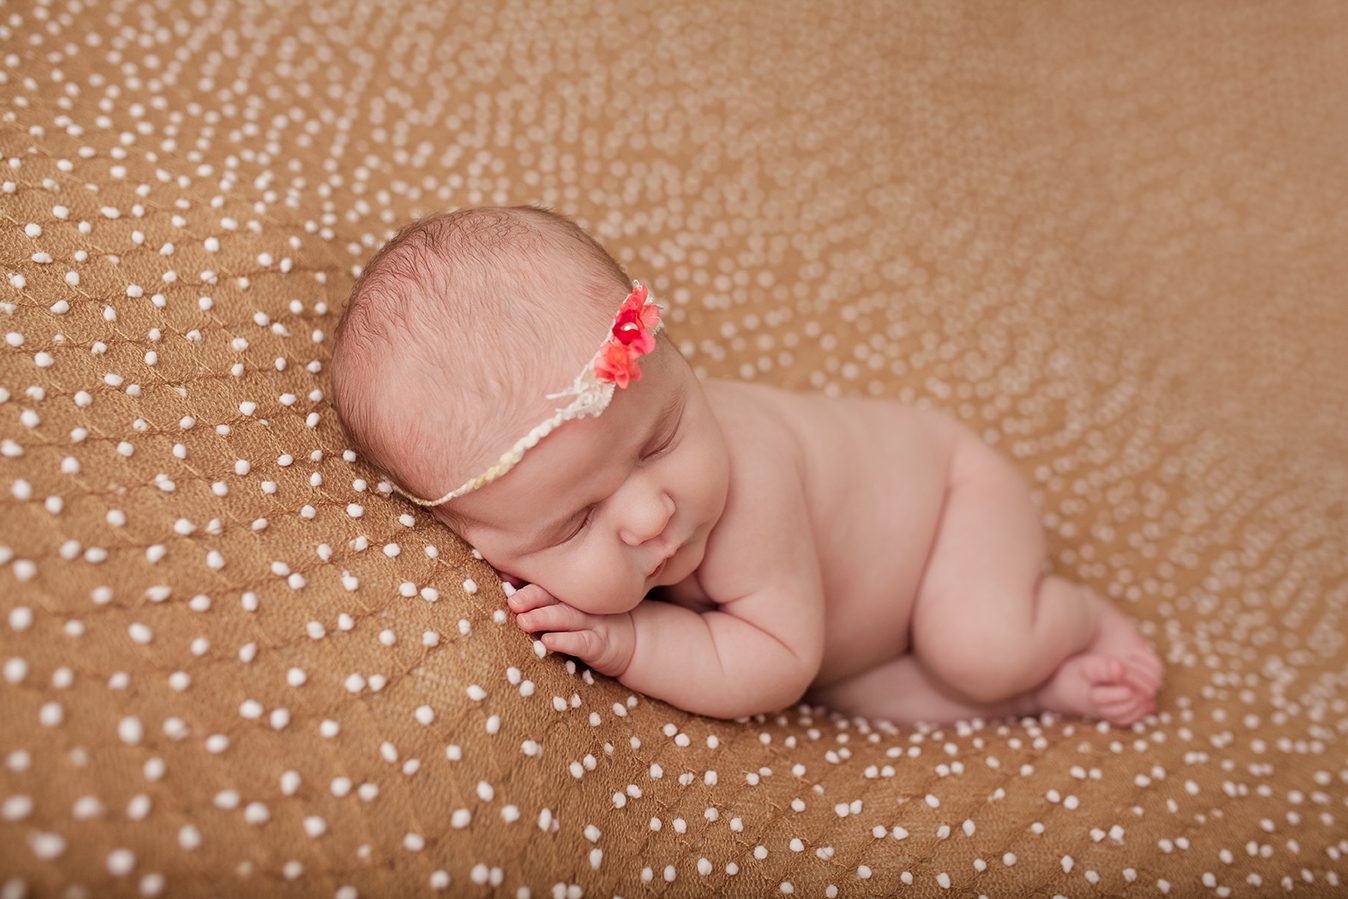 edmonton newborn photographer - posed on her tummy